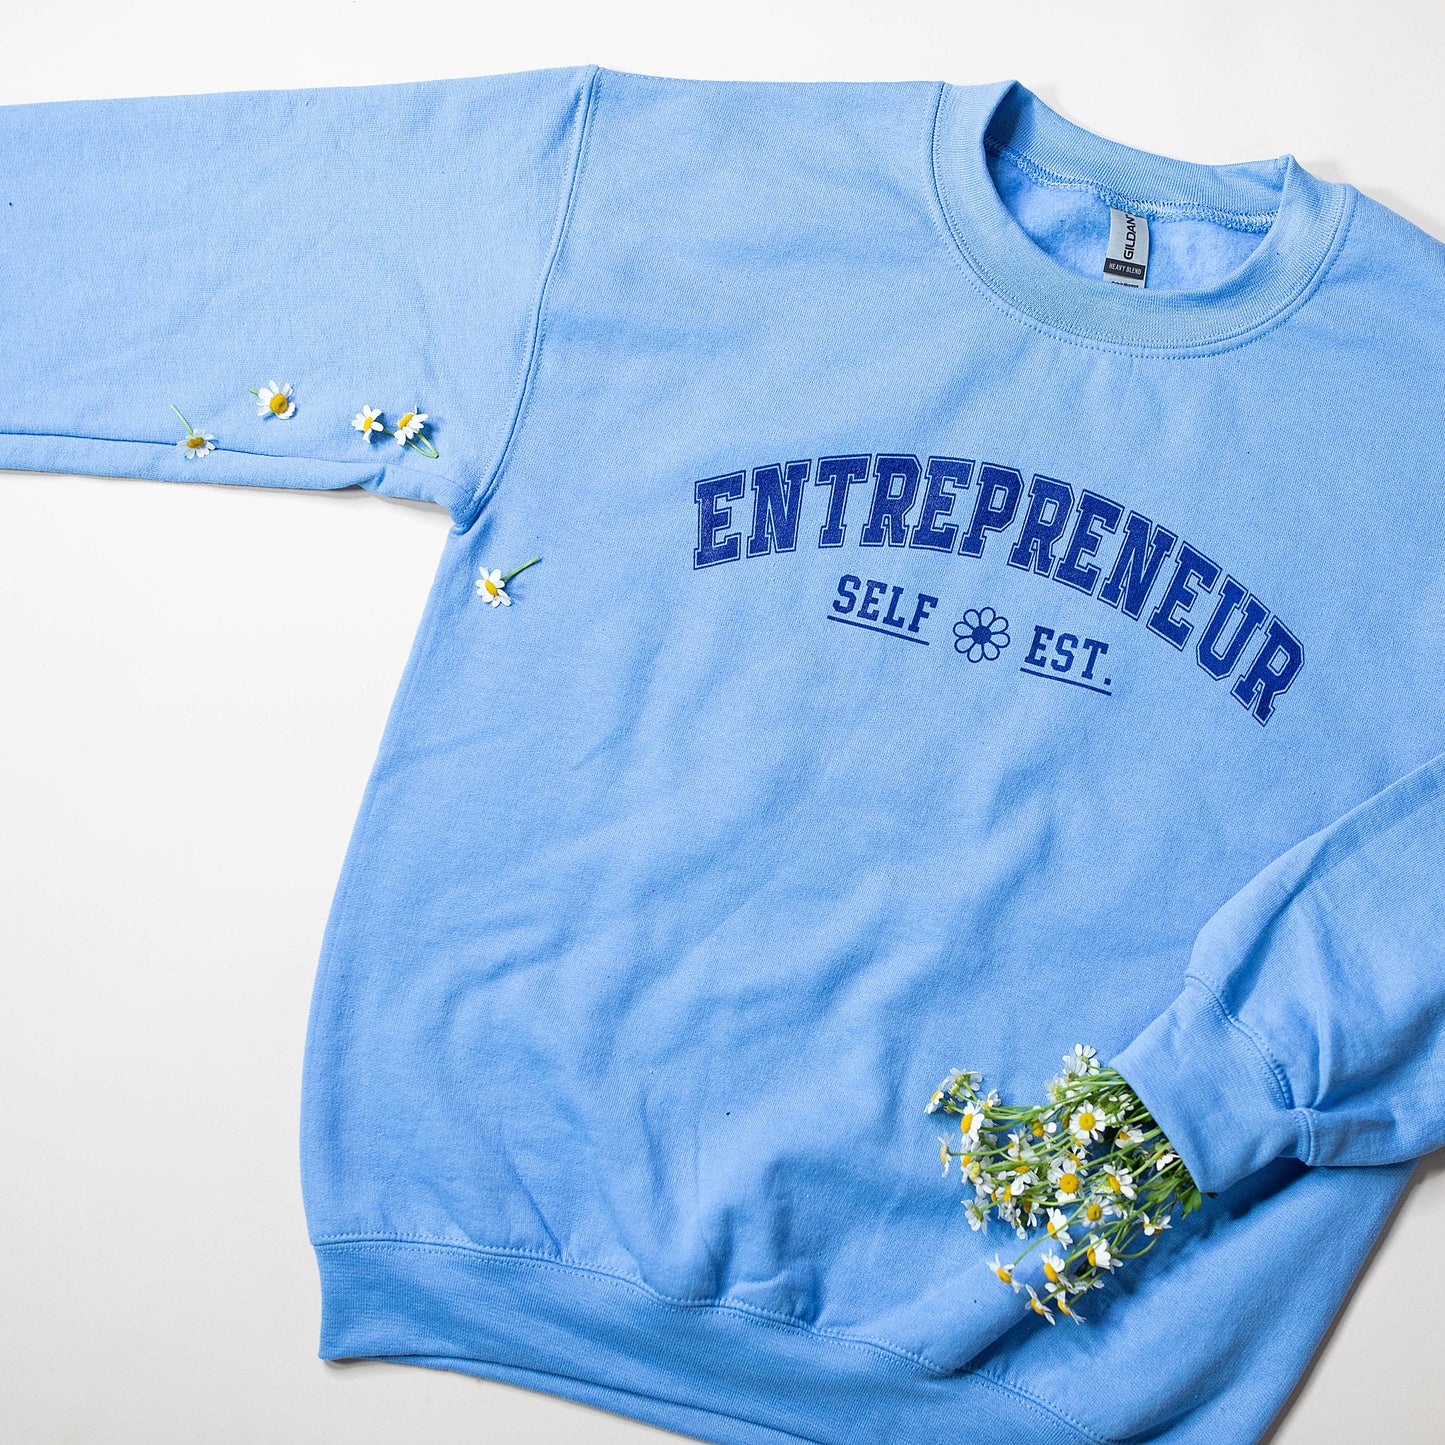 Entrepreneur Sweatshirt BLUE